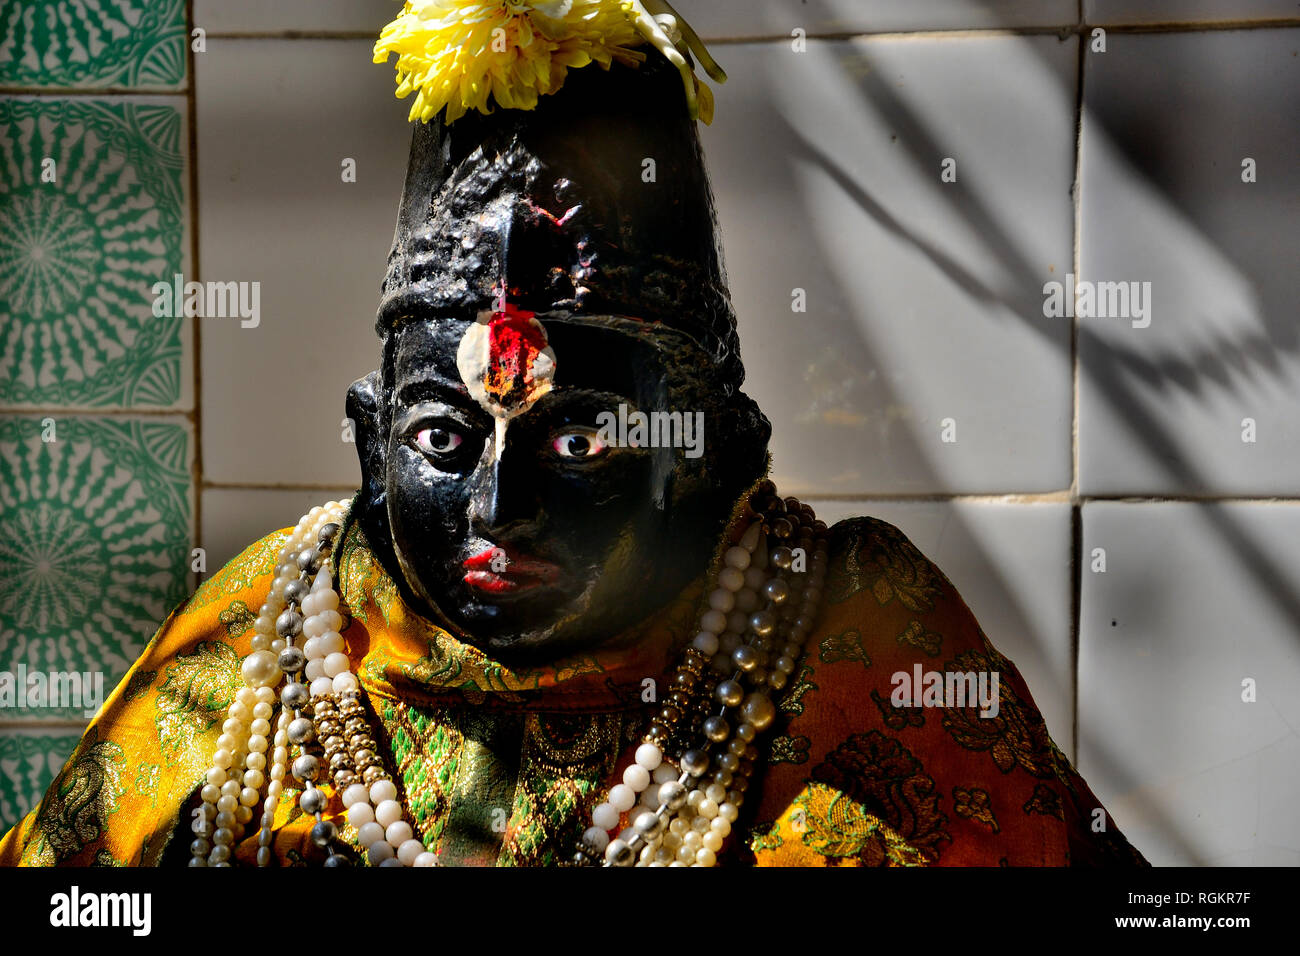 Idol of Lord Vitthal, Shree Nageshwar Shiva Temple, Somwar Peth, Pune, Maharashtra, India Stock Photo